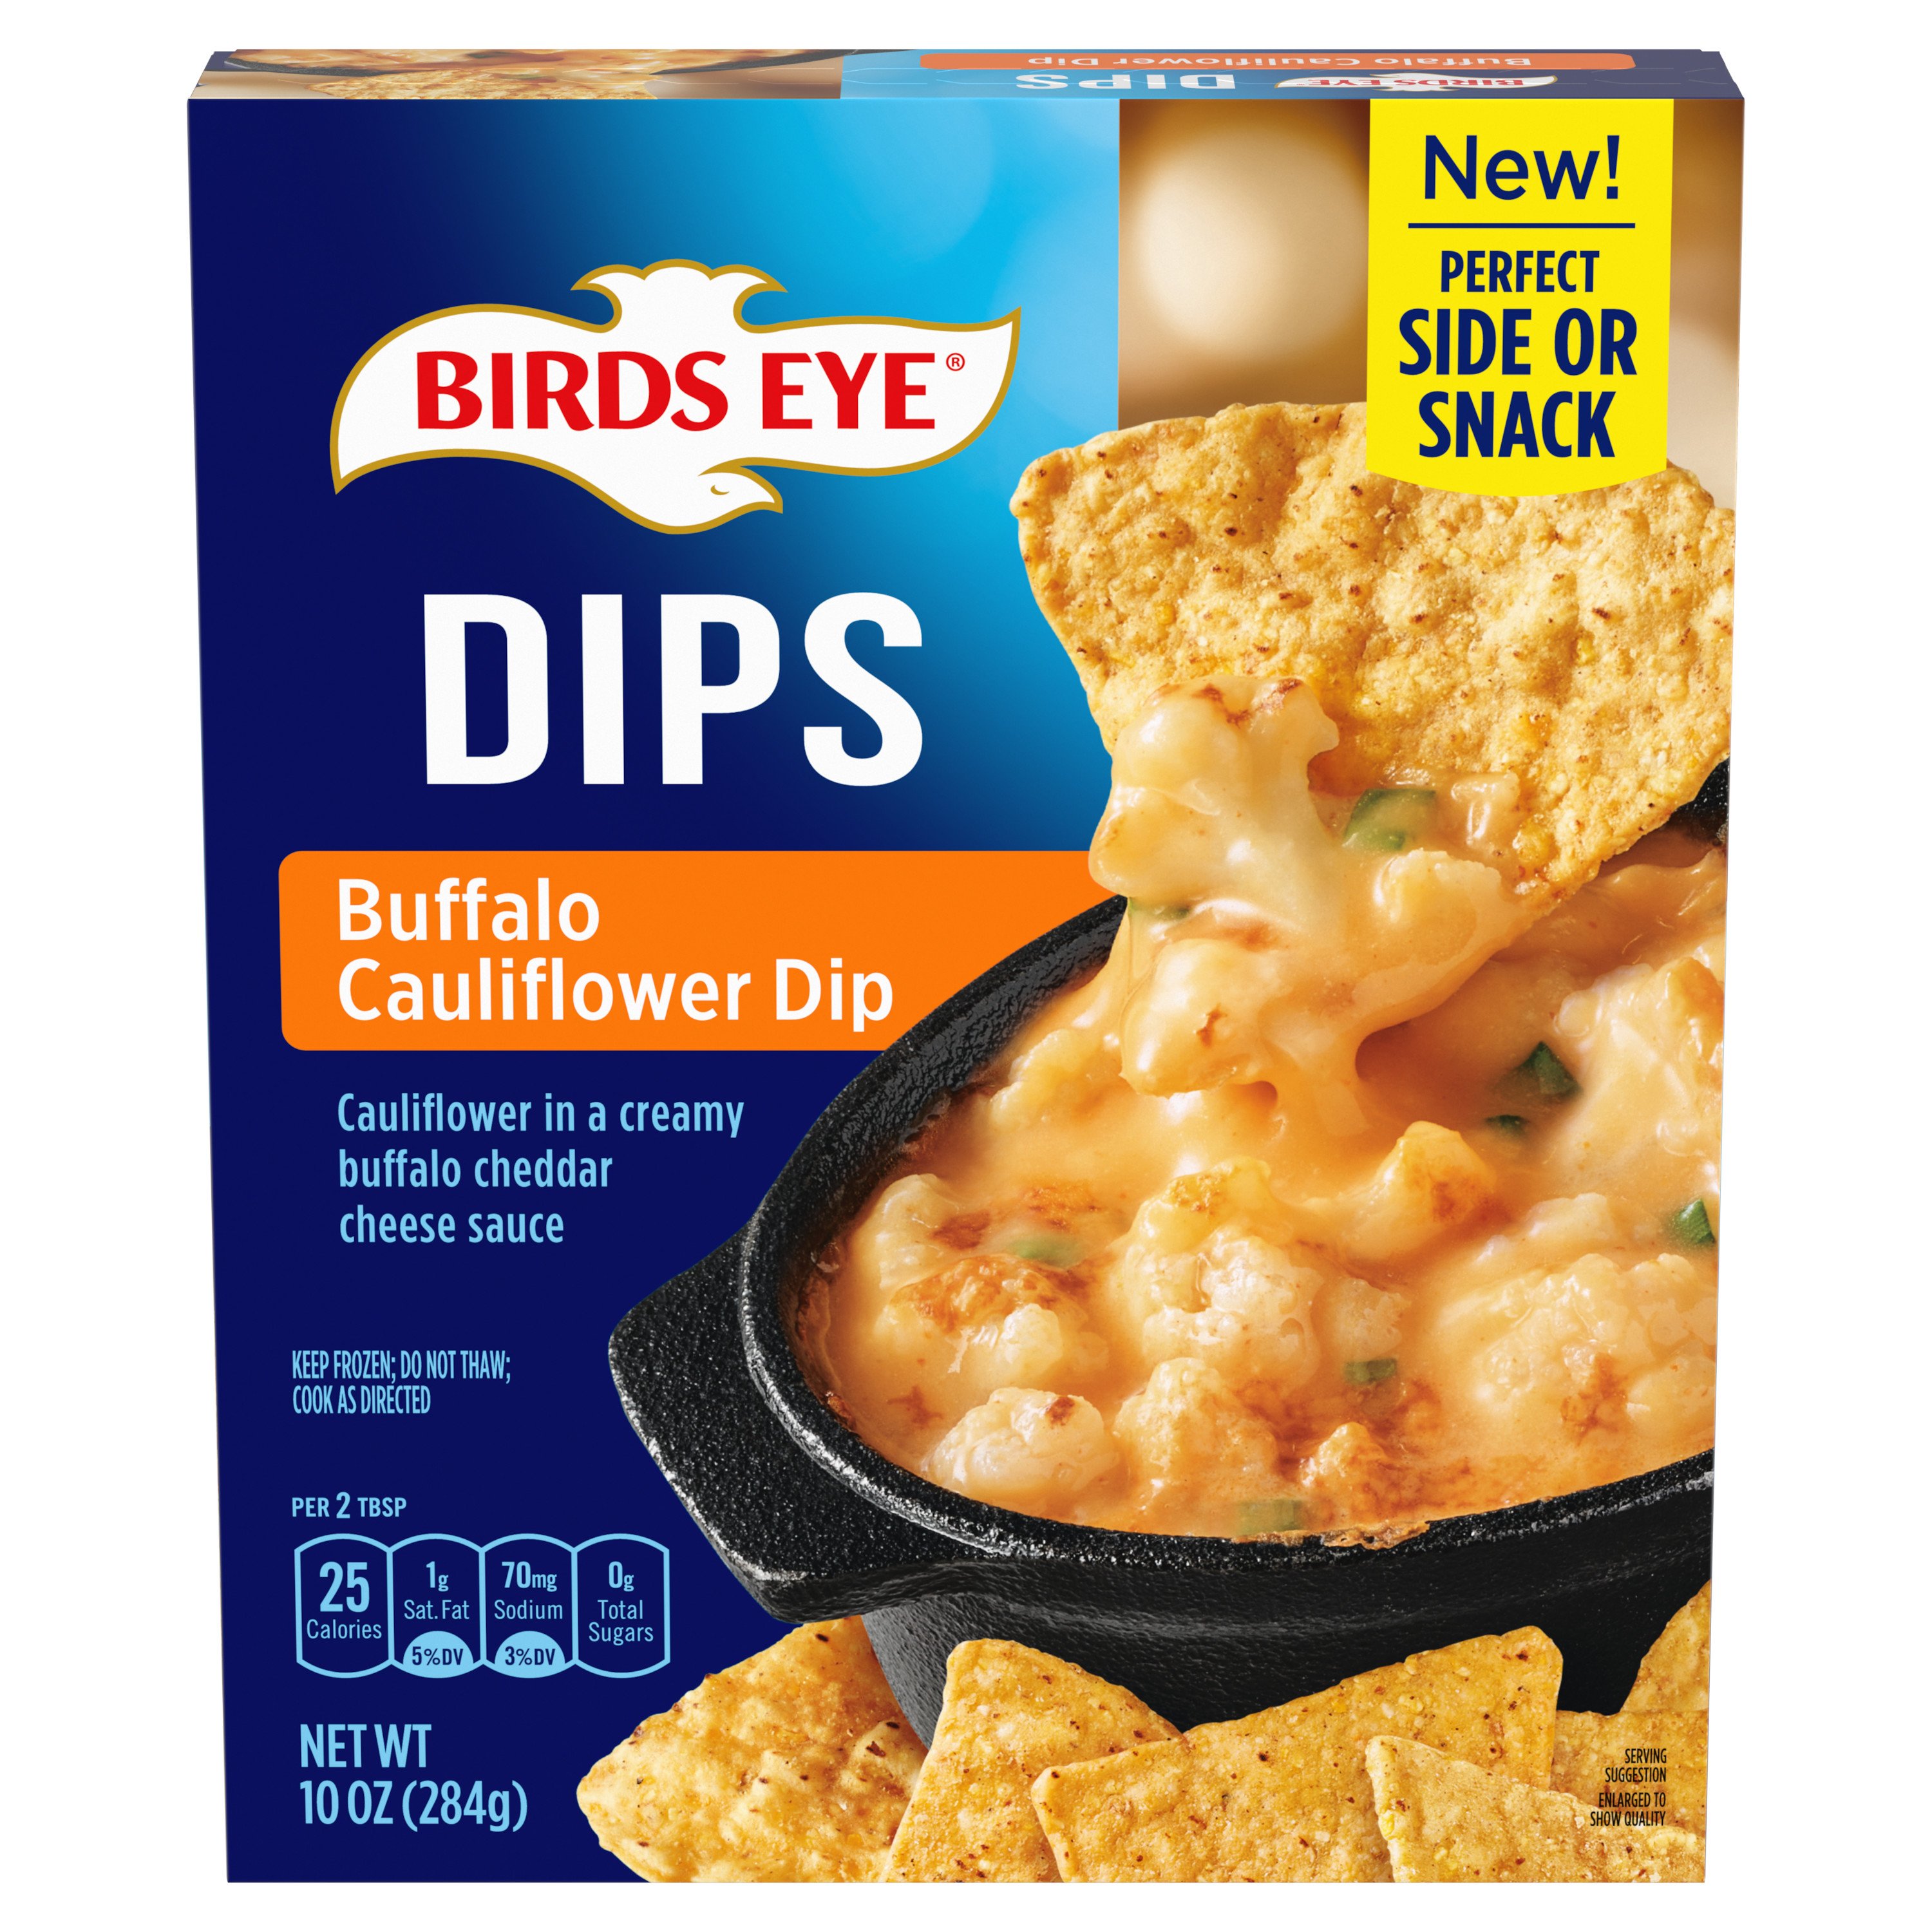 Buffalo Cauliflower “Heat and Eat” Dip